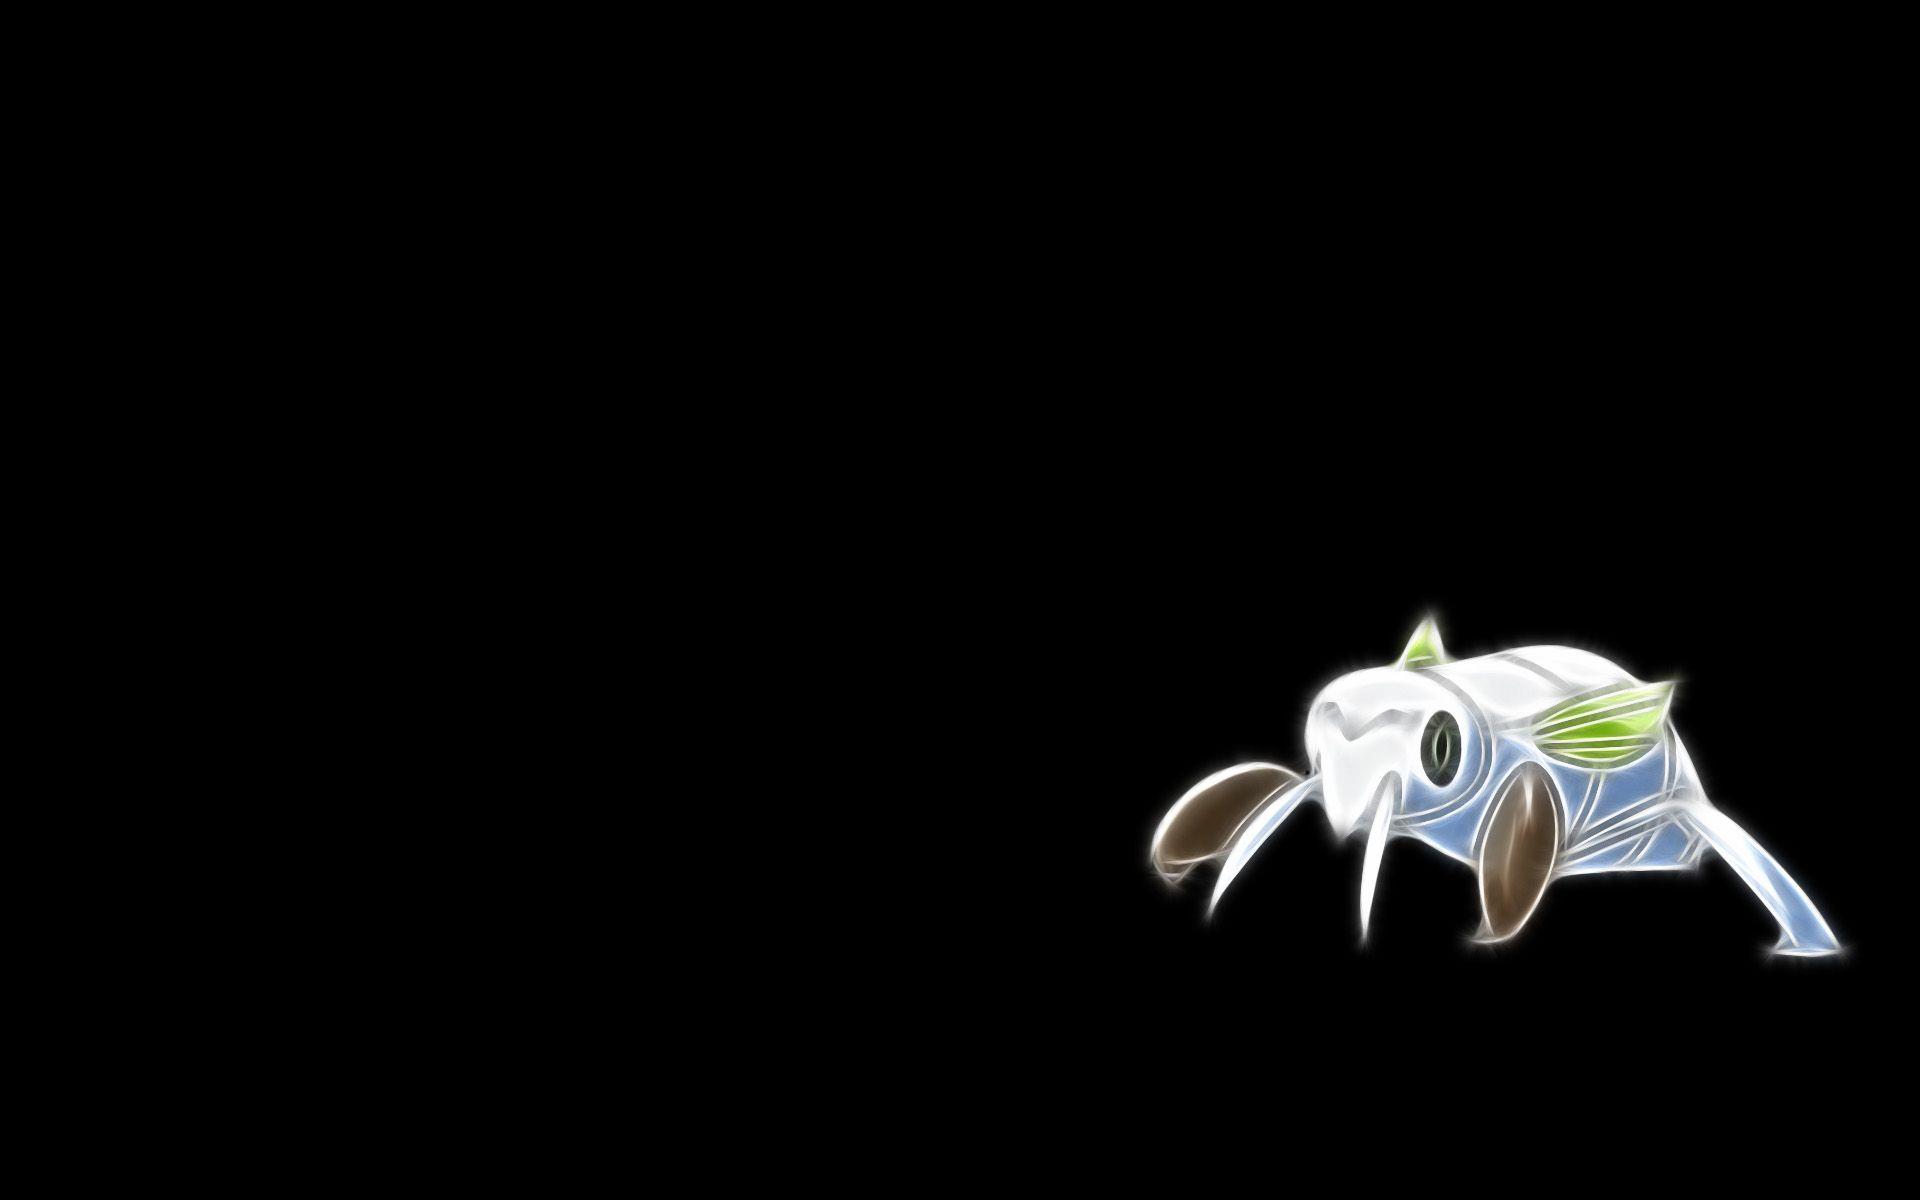 Nincada (Pokémon) HD Wallpaper and Background Image